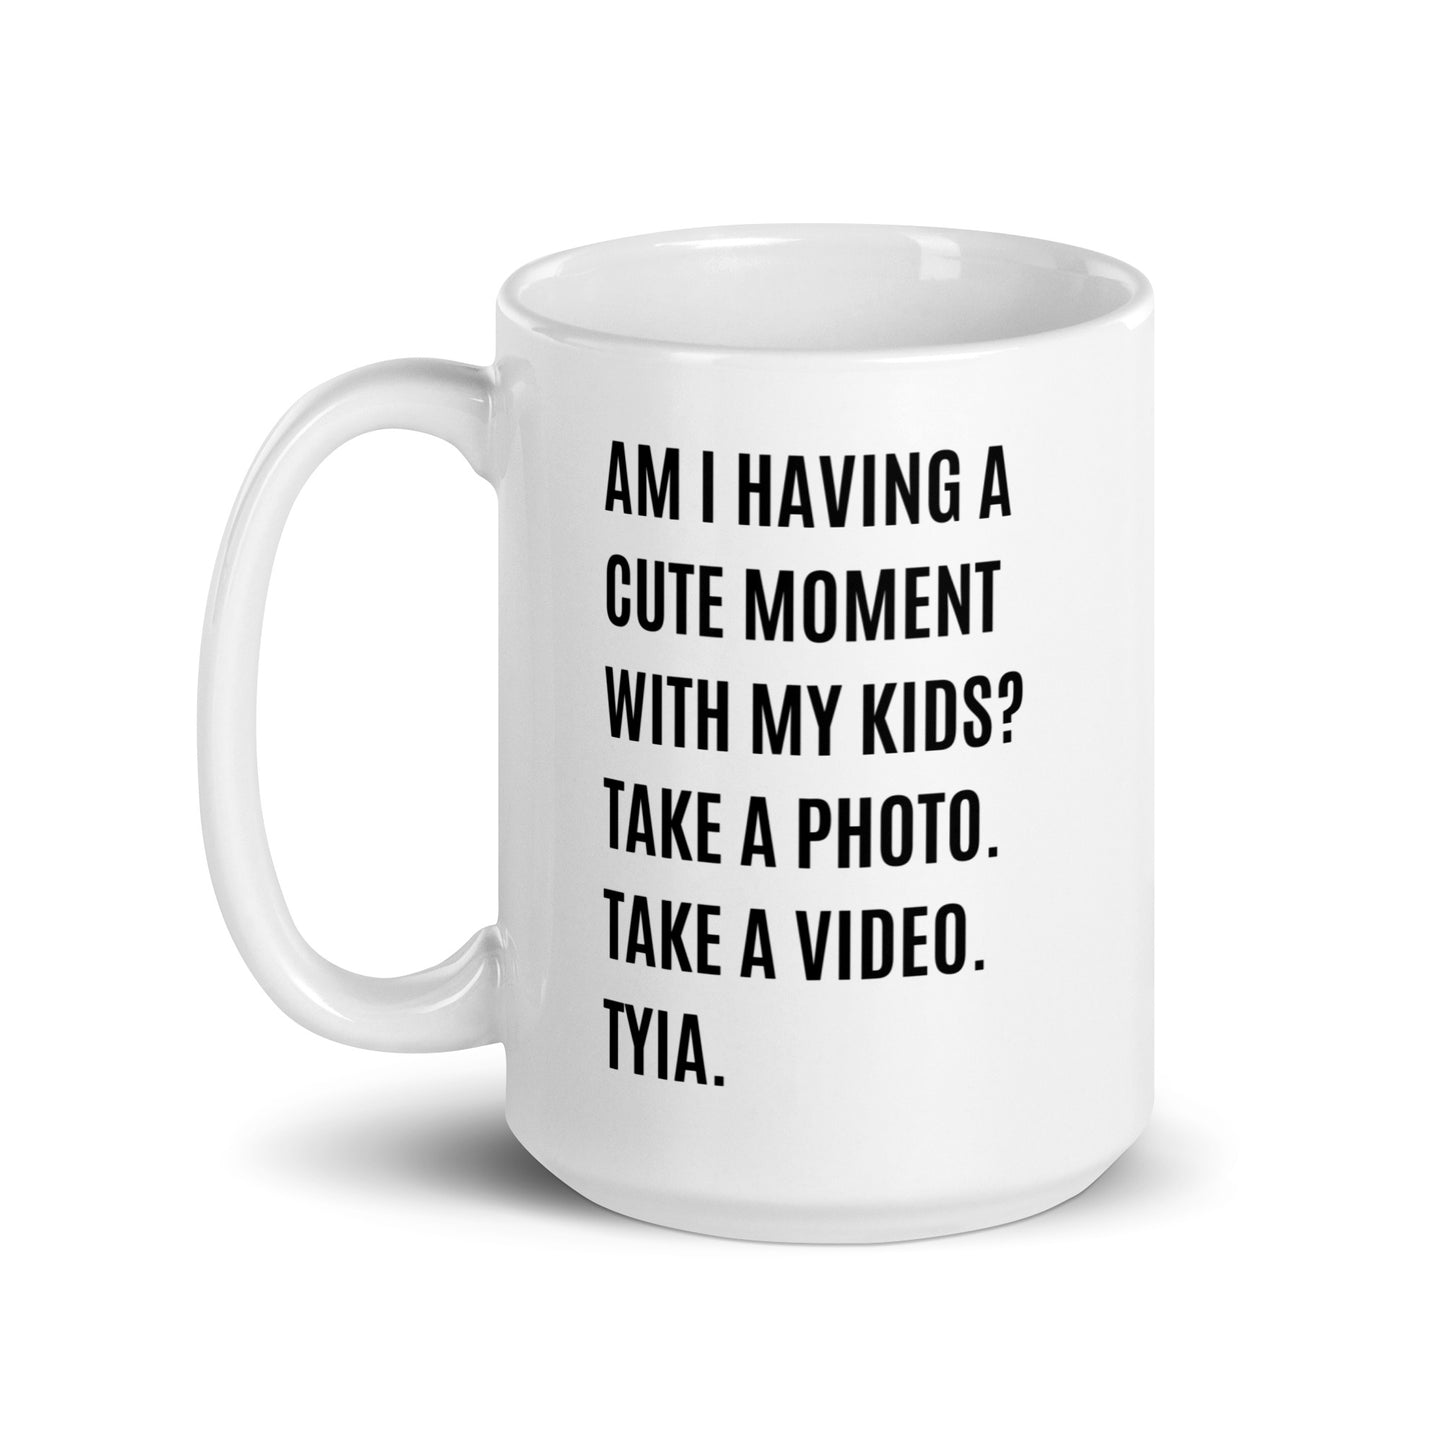 Am I having a cute moment with my kids? Take a photo. Take a video. TYIA. (White glossy mug)